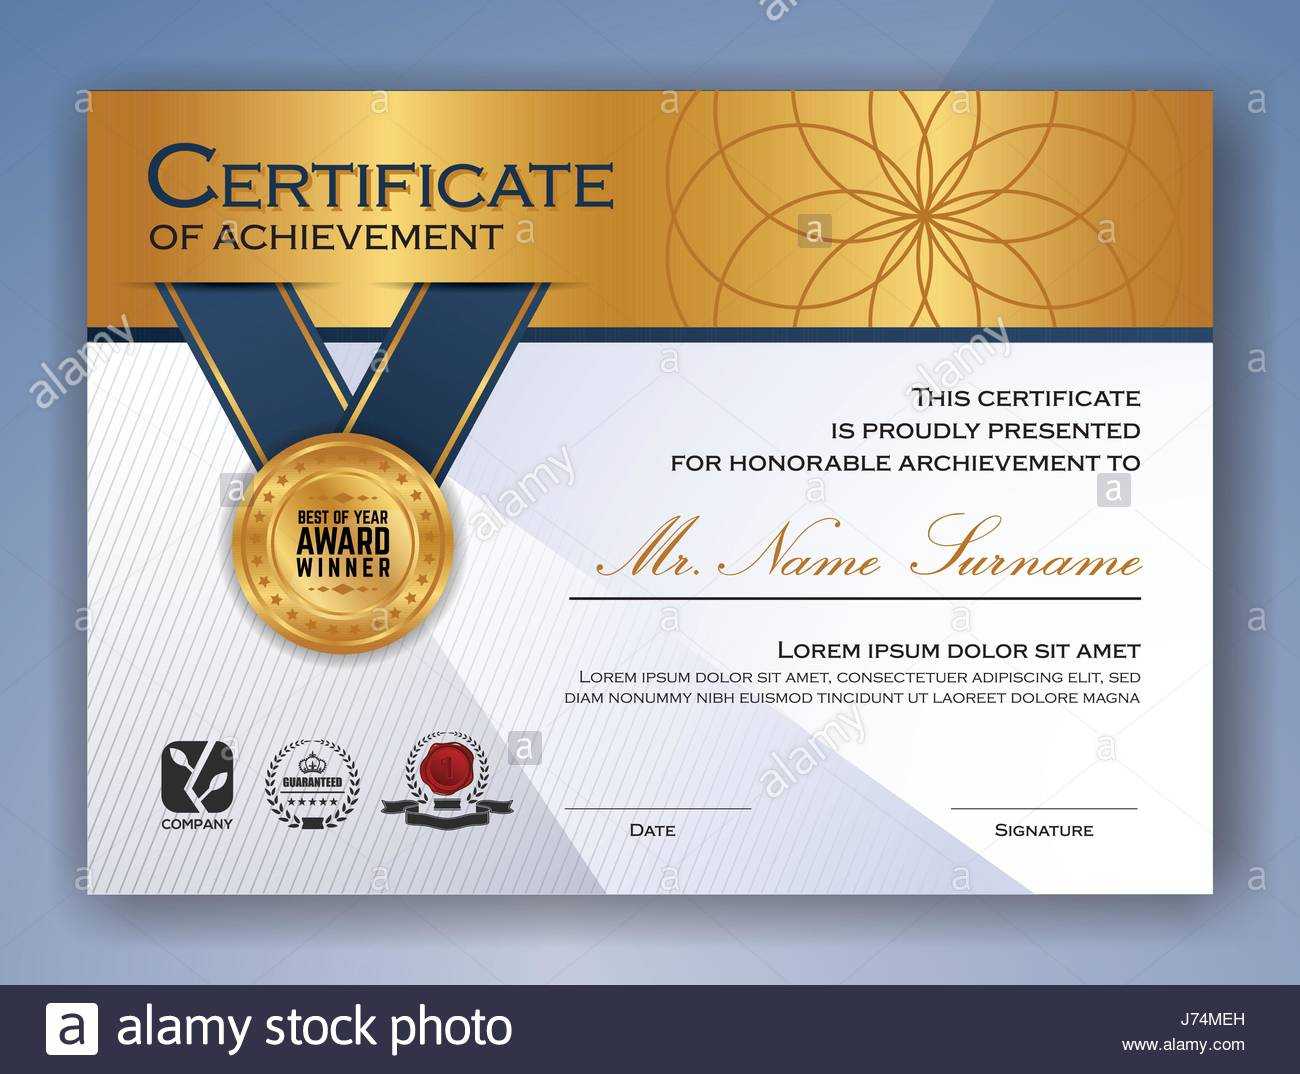 Multipurpose Professional Certificate Template Design For Regarding Professional Award Certificate Template